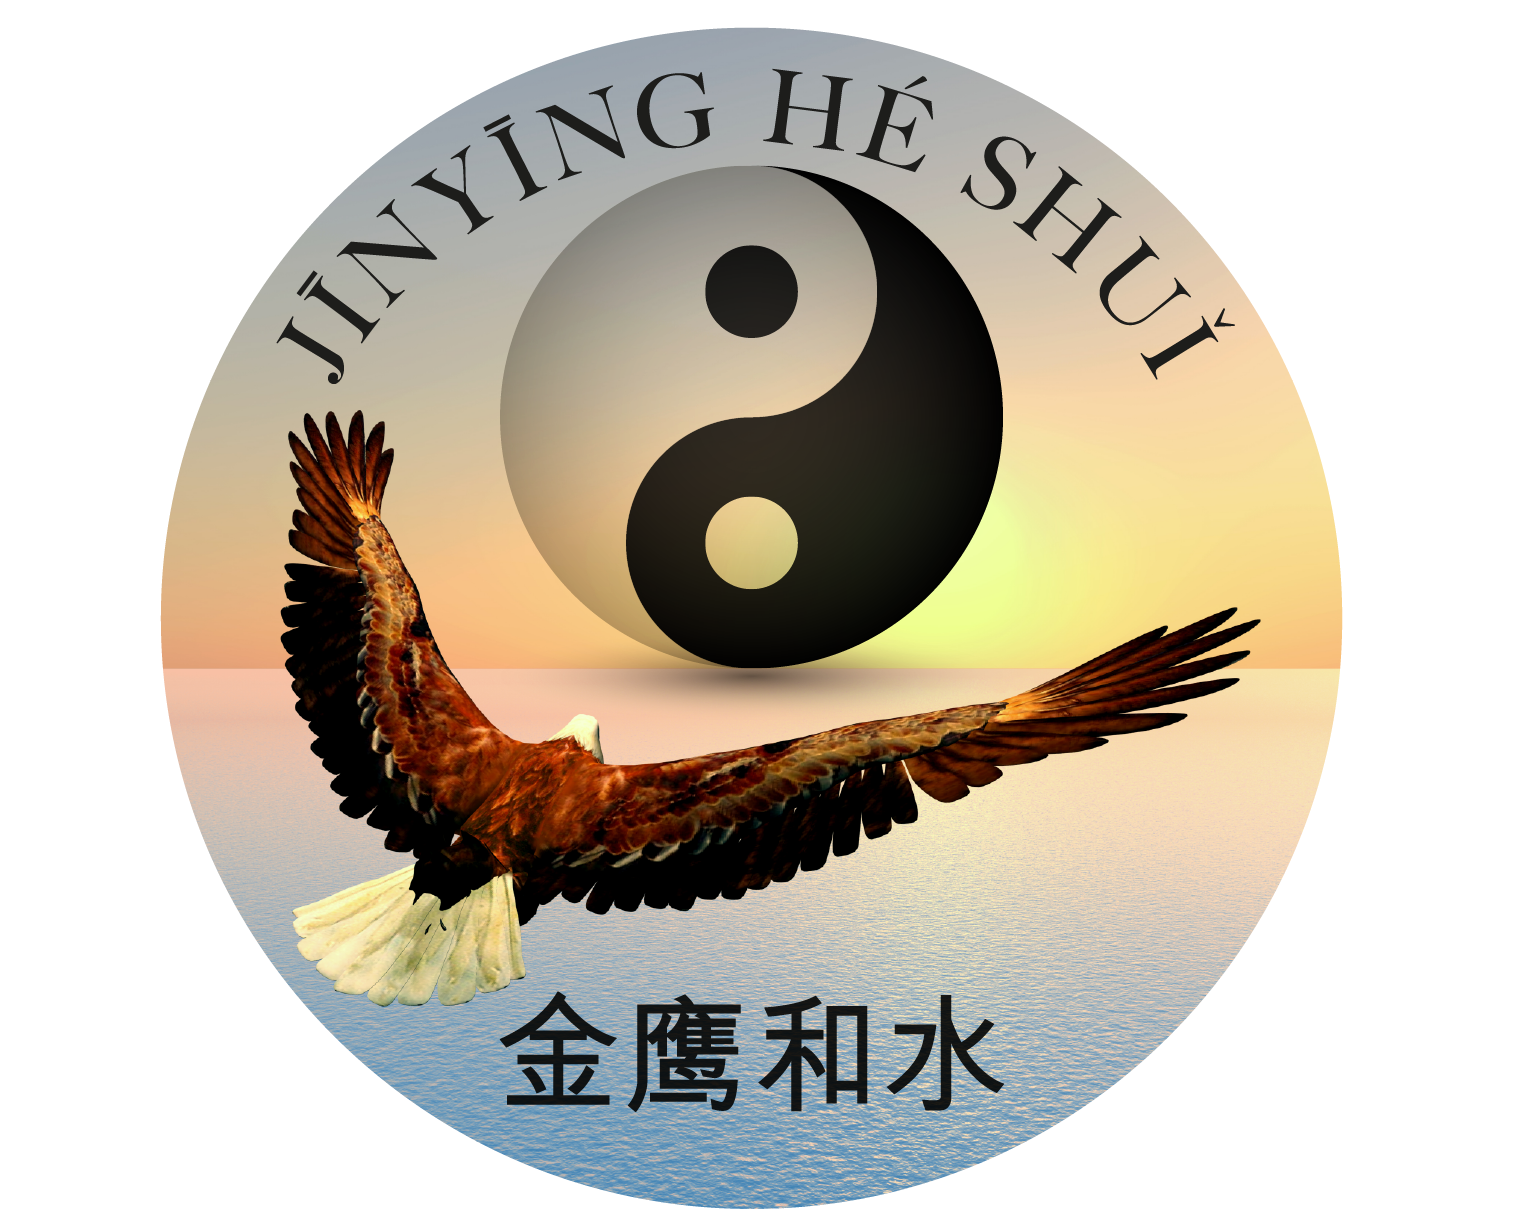 Logo Tai Chi